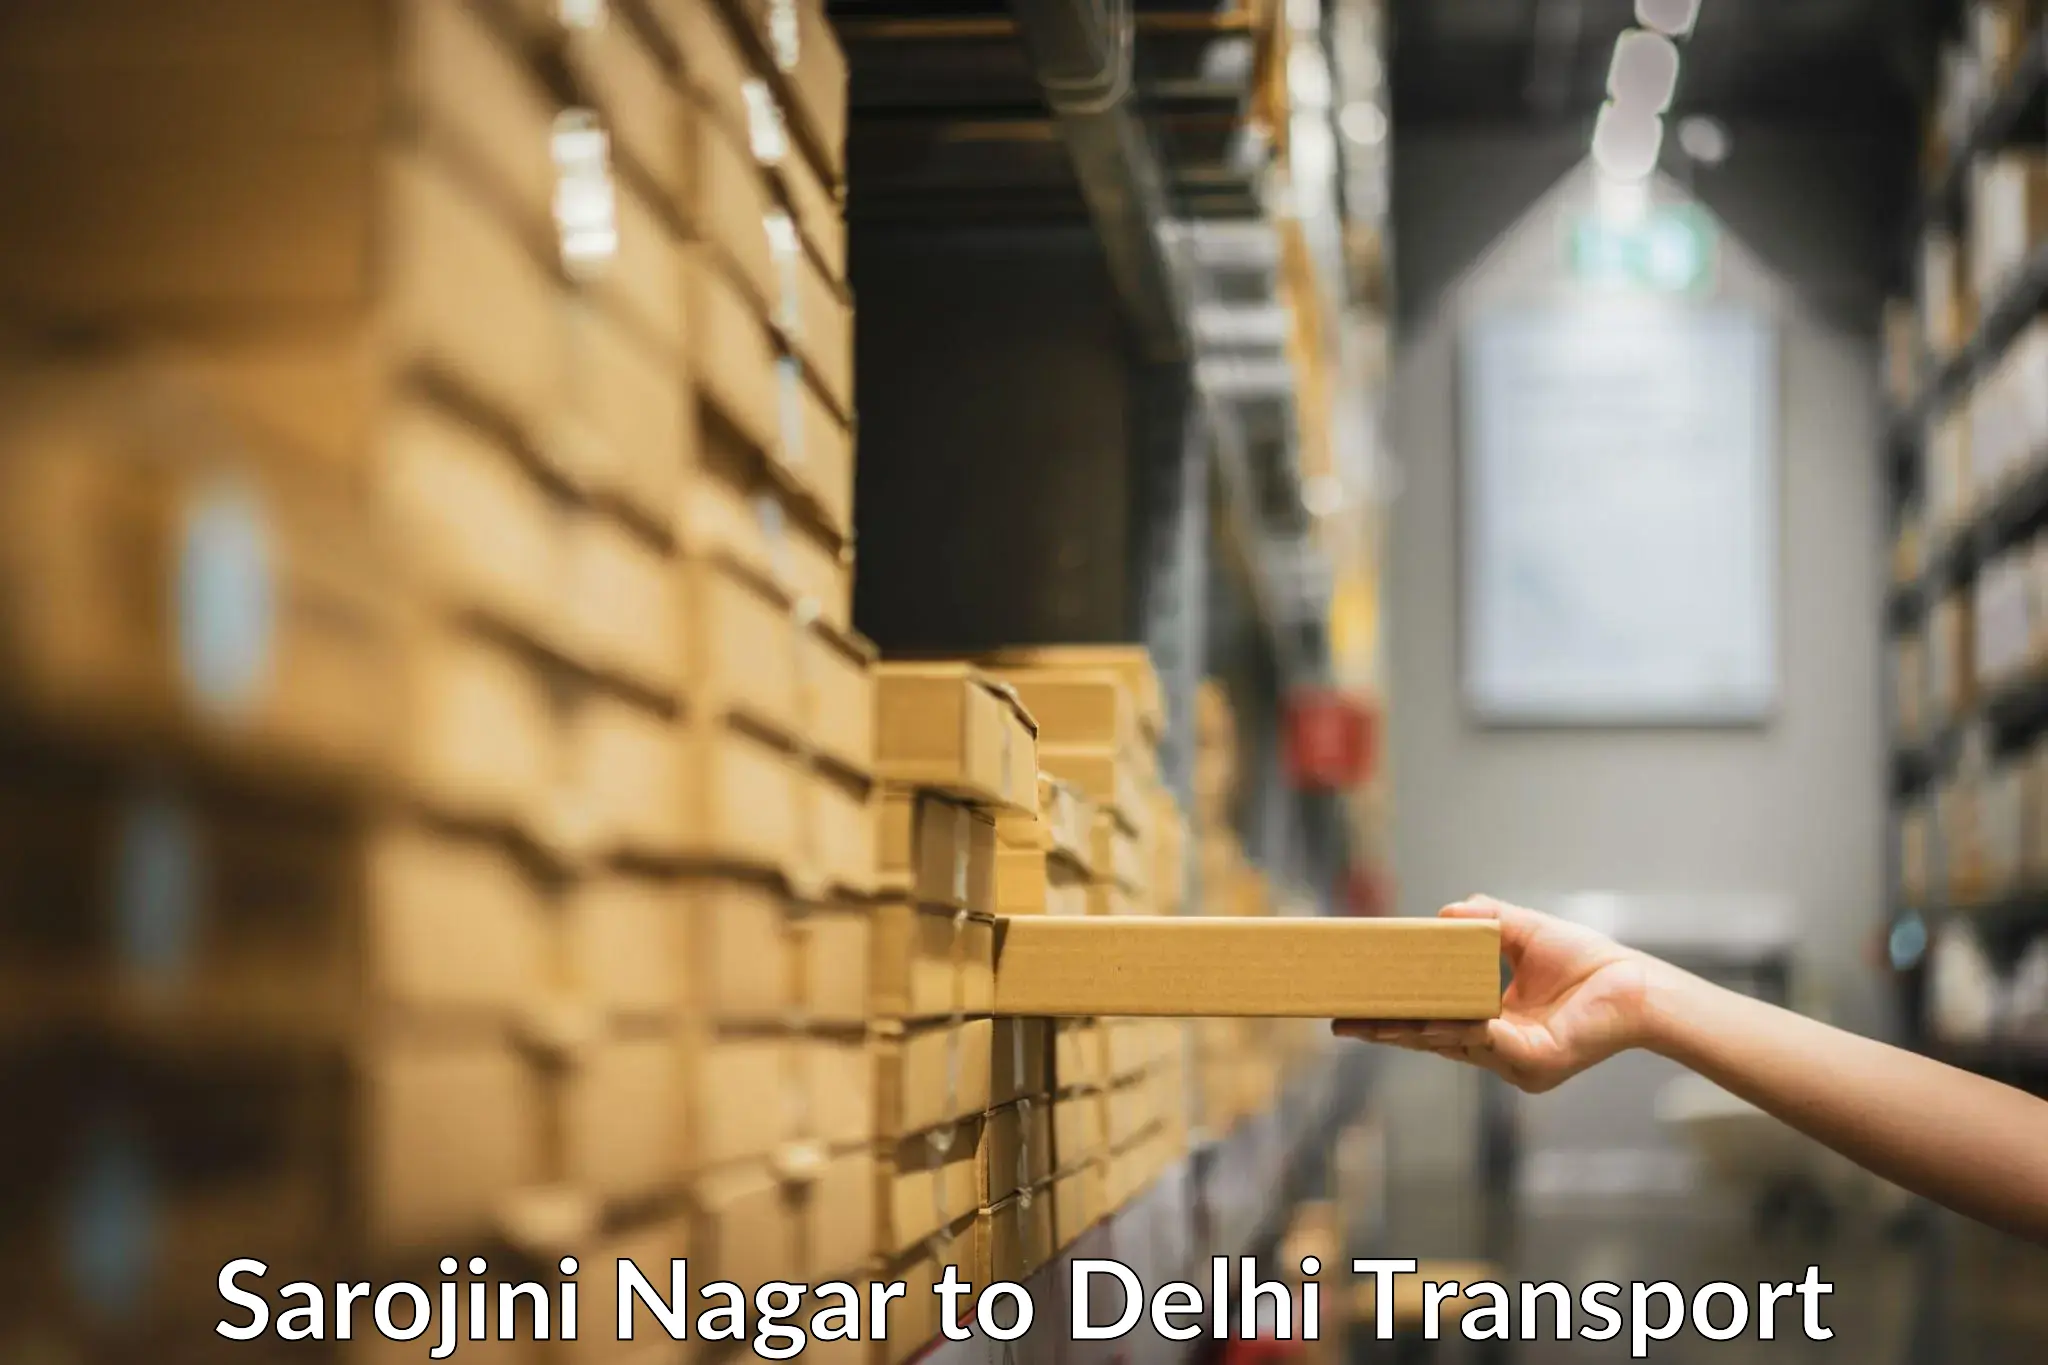 Goods delivery service Sarojini Nagar to NCR